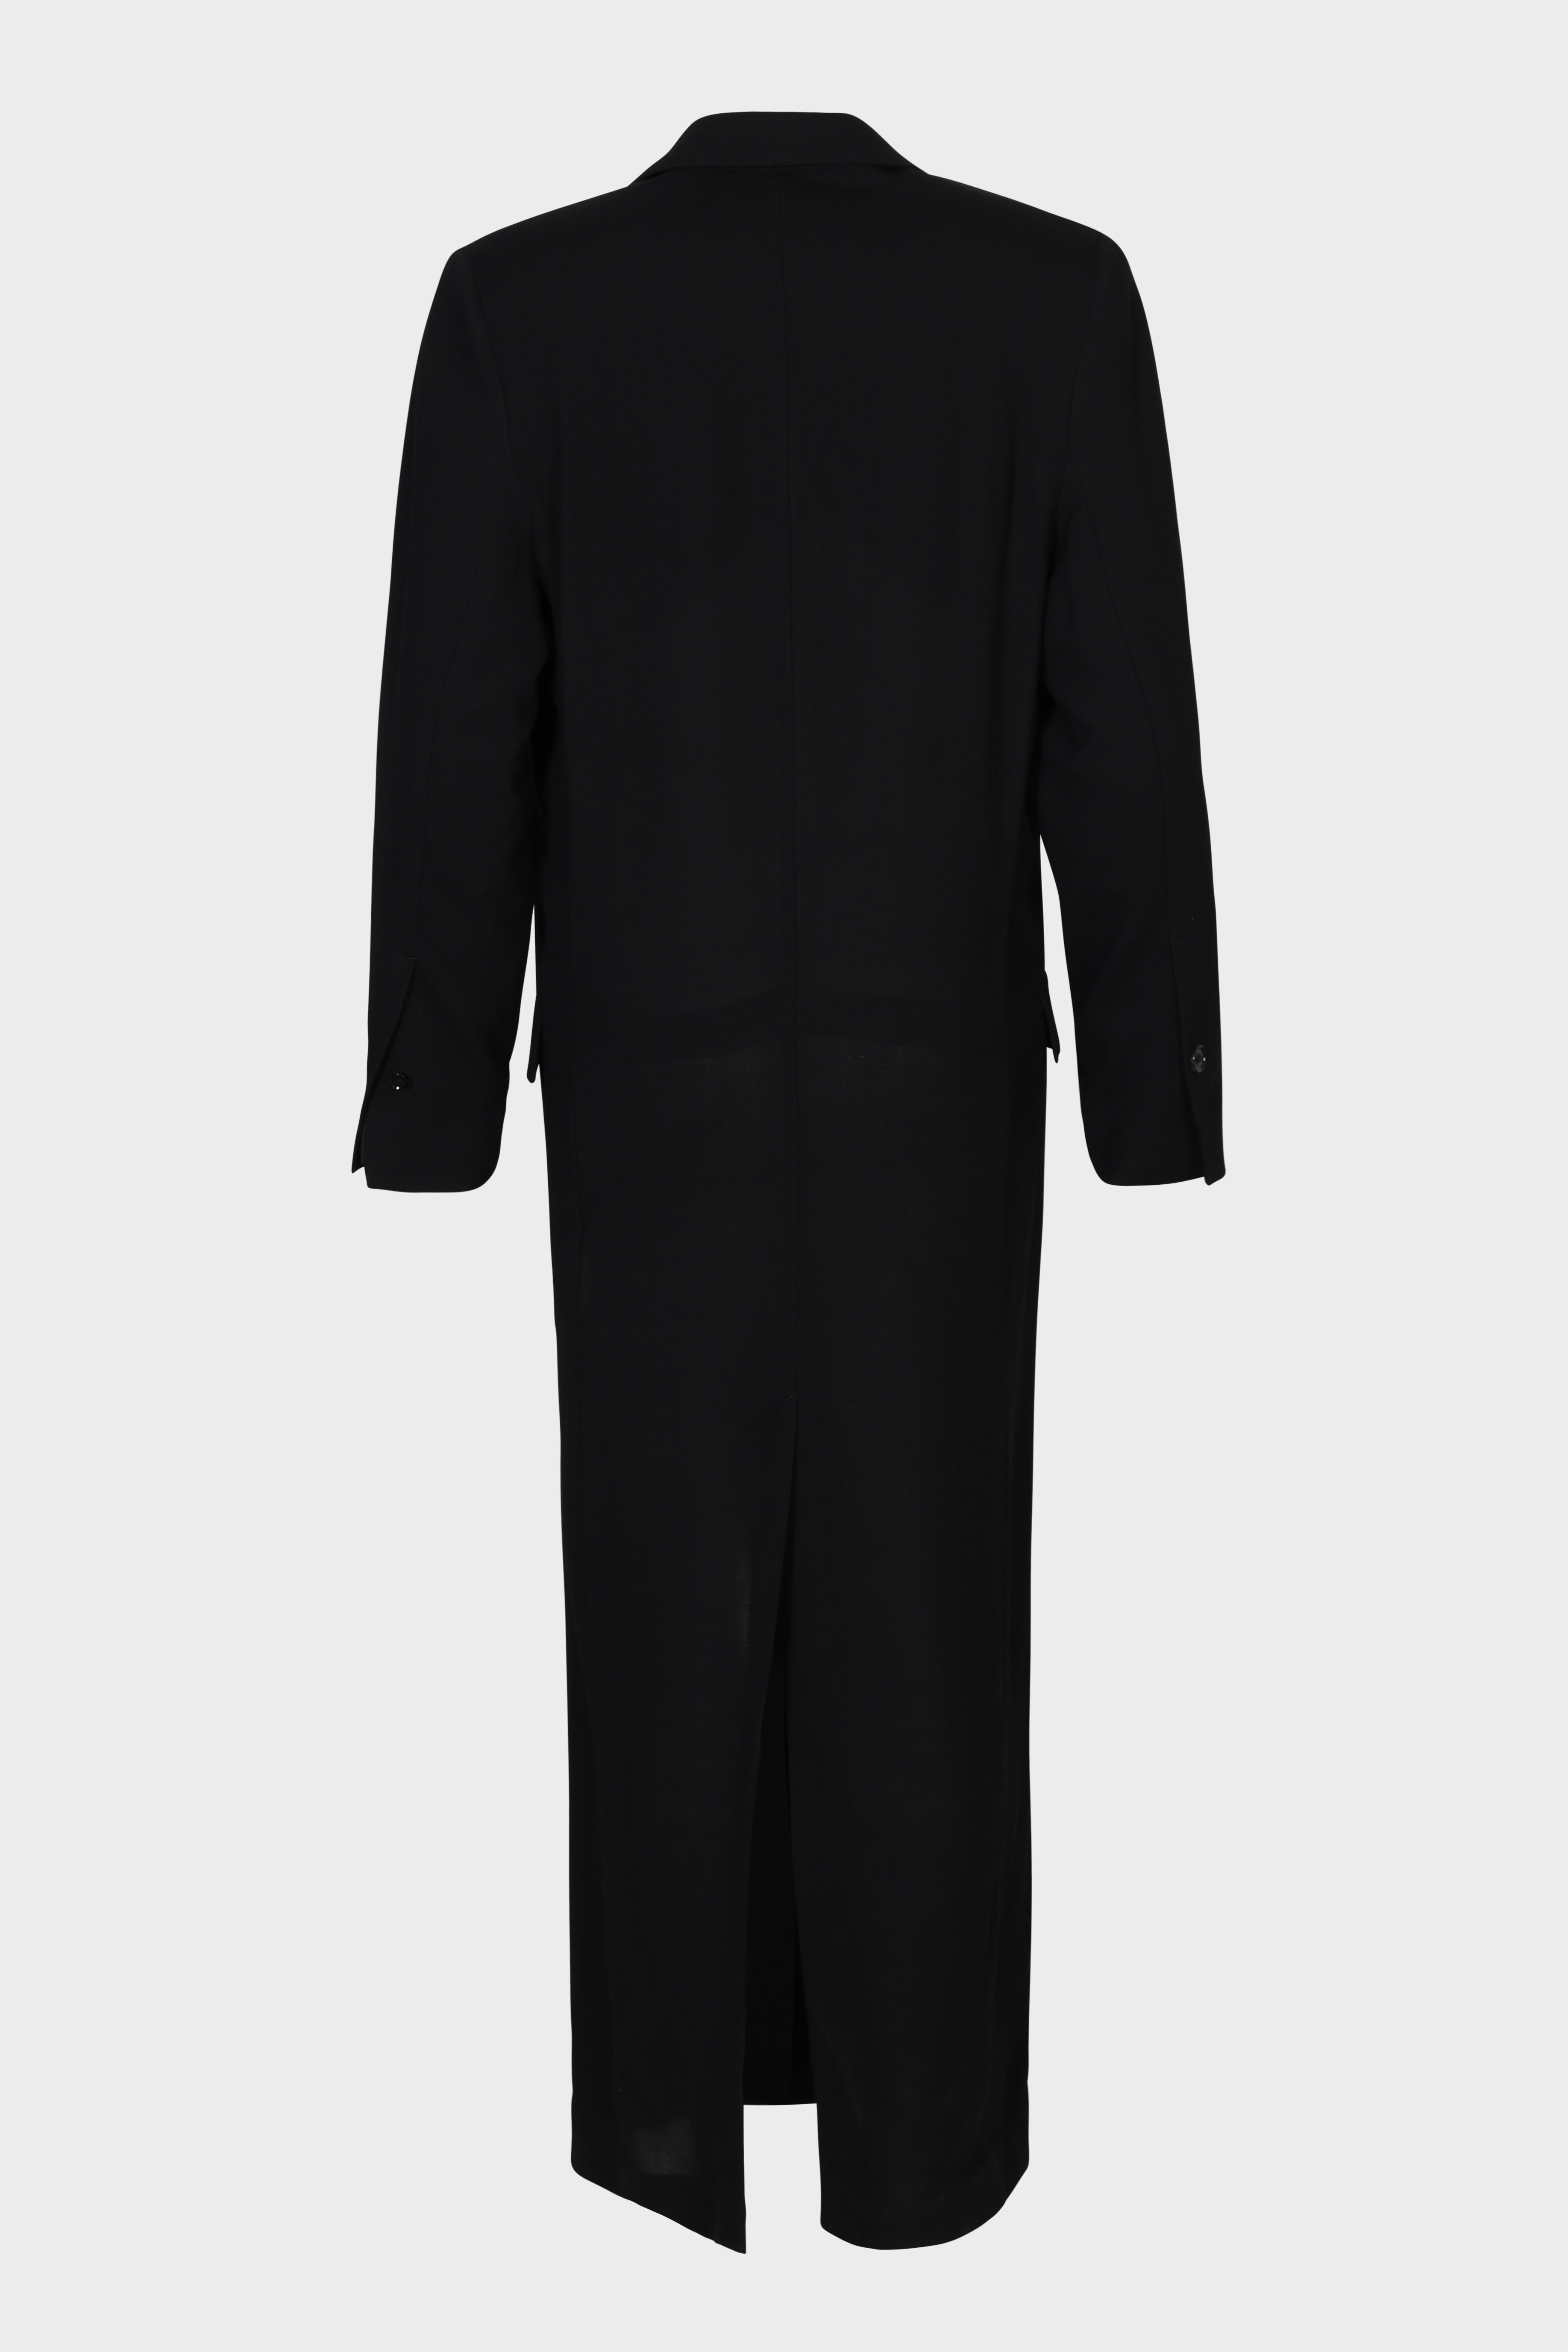 AMI PARIS Gabardine Coat Dress in Black FR38 / DE36